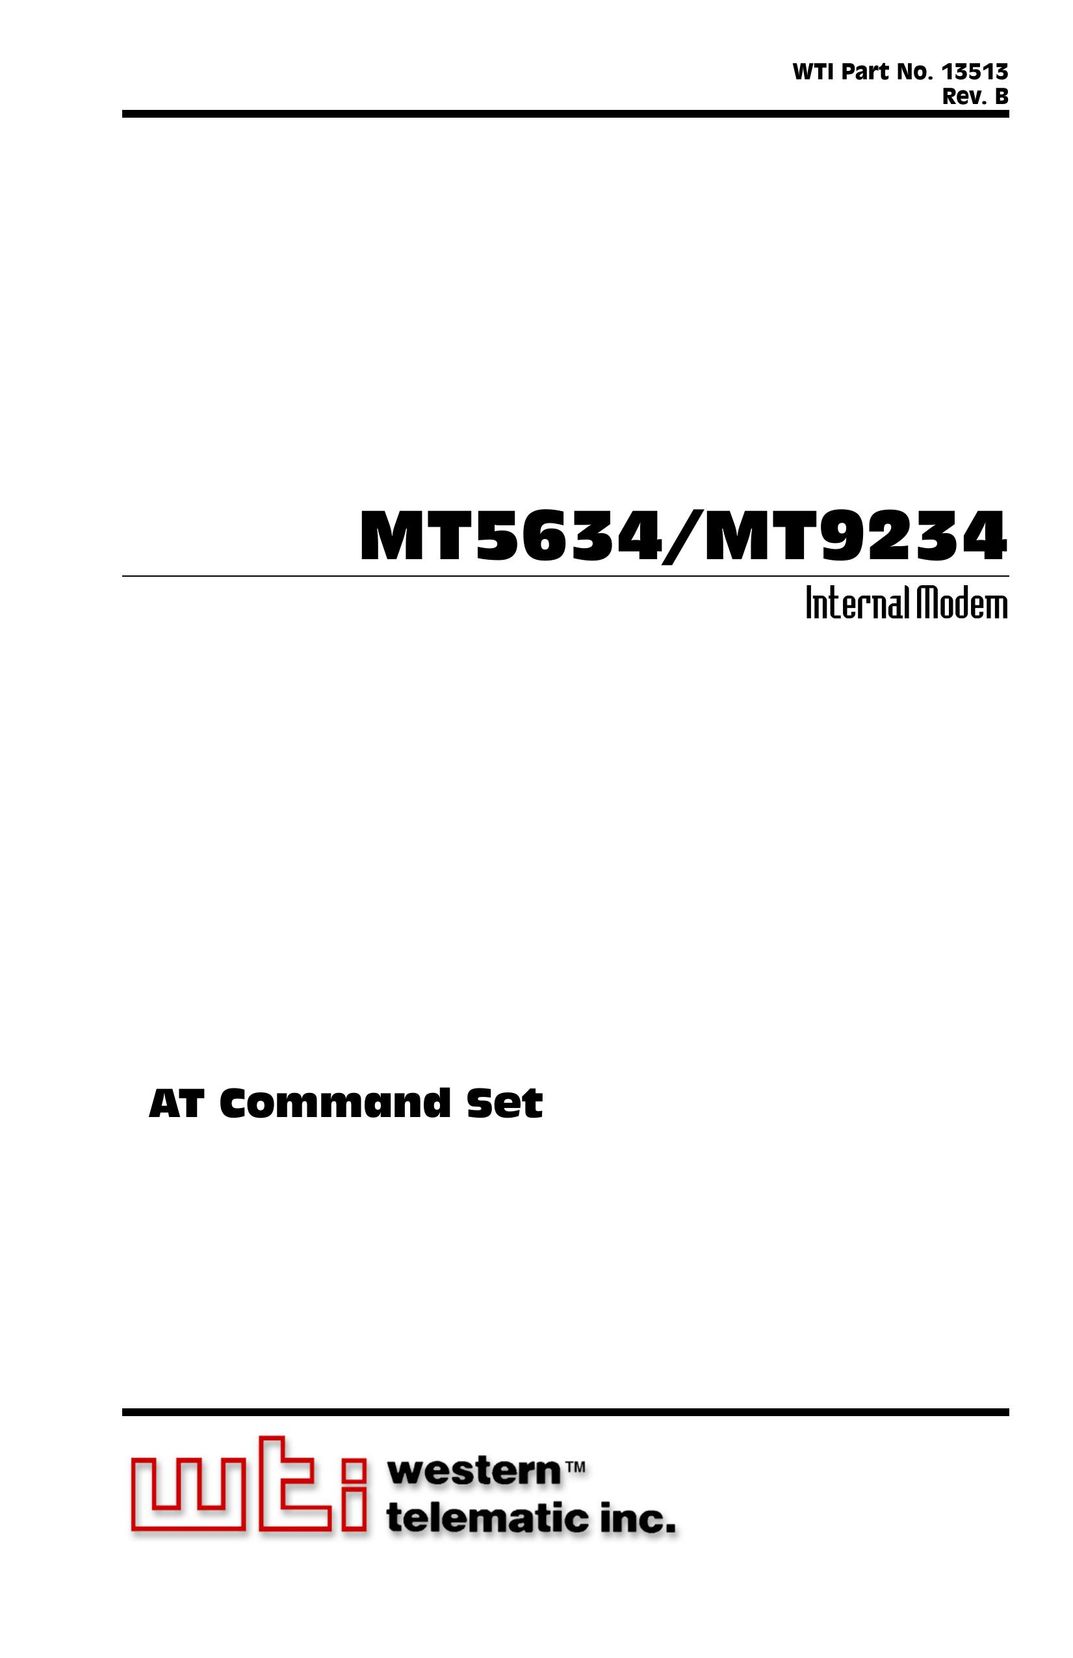 Western Telematic MT5634 Modem User Manual